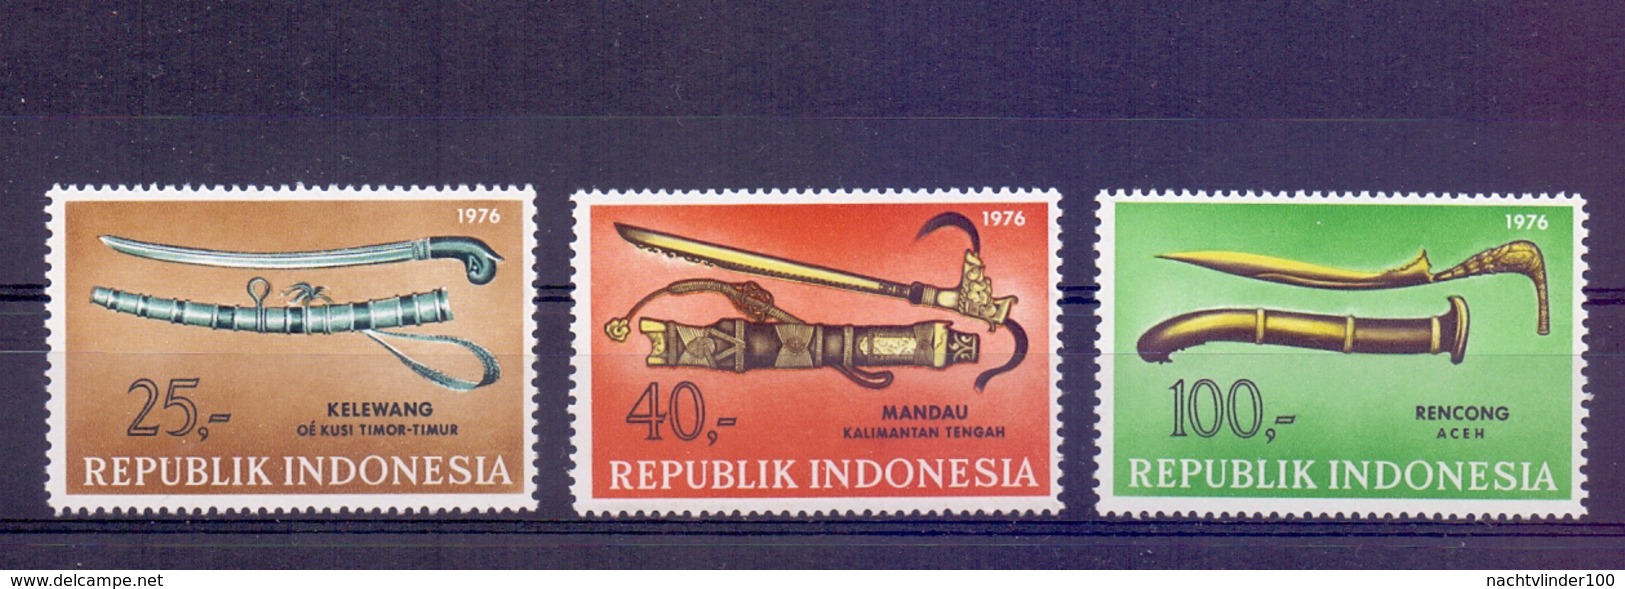 Mgm0864  KUNST EN CULTUUR WAPENS ZWAARD SWORD INDONESIA 1976 PF/MNH - Indonesië